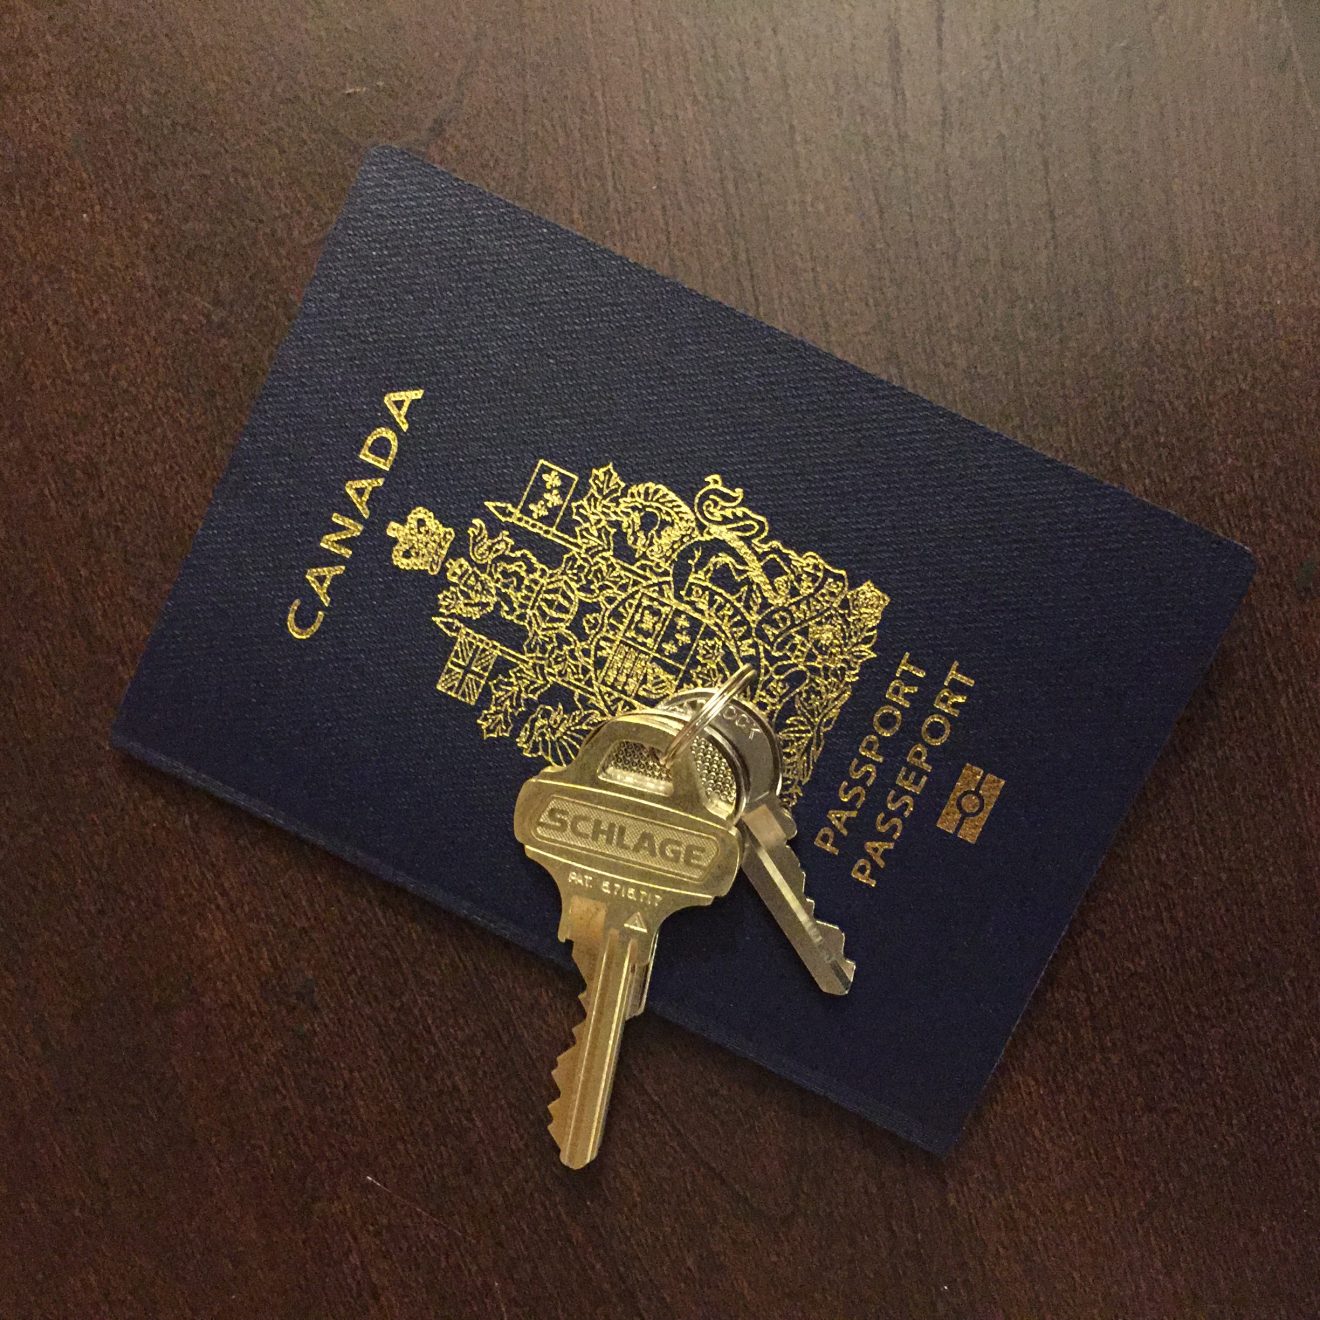 Canadian passport and keys